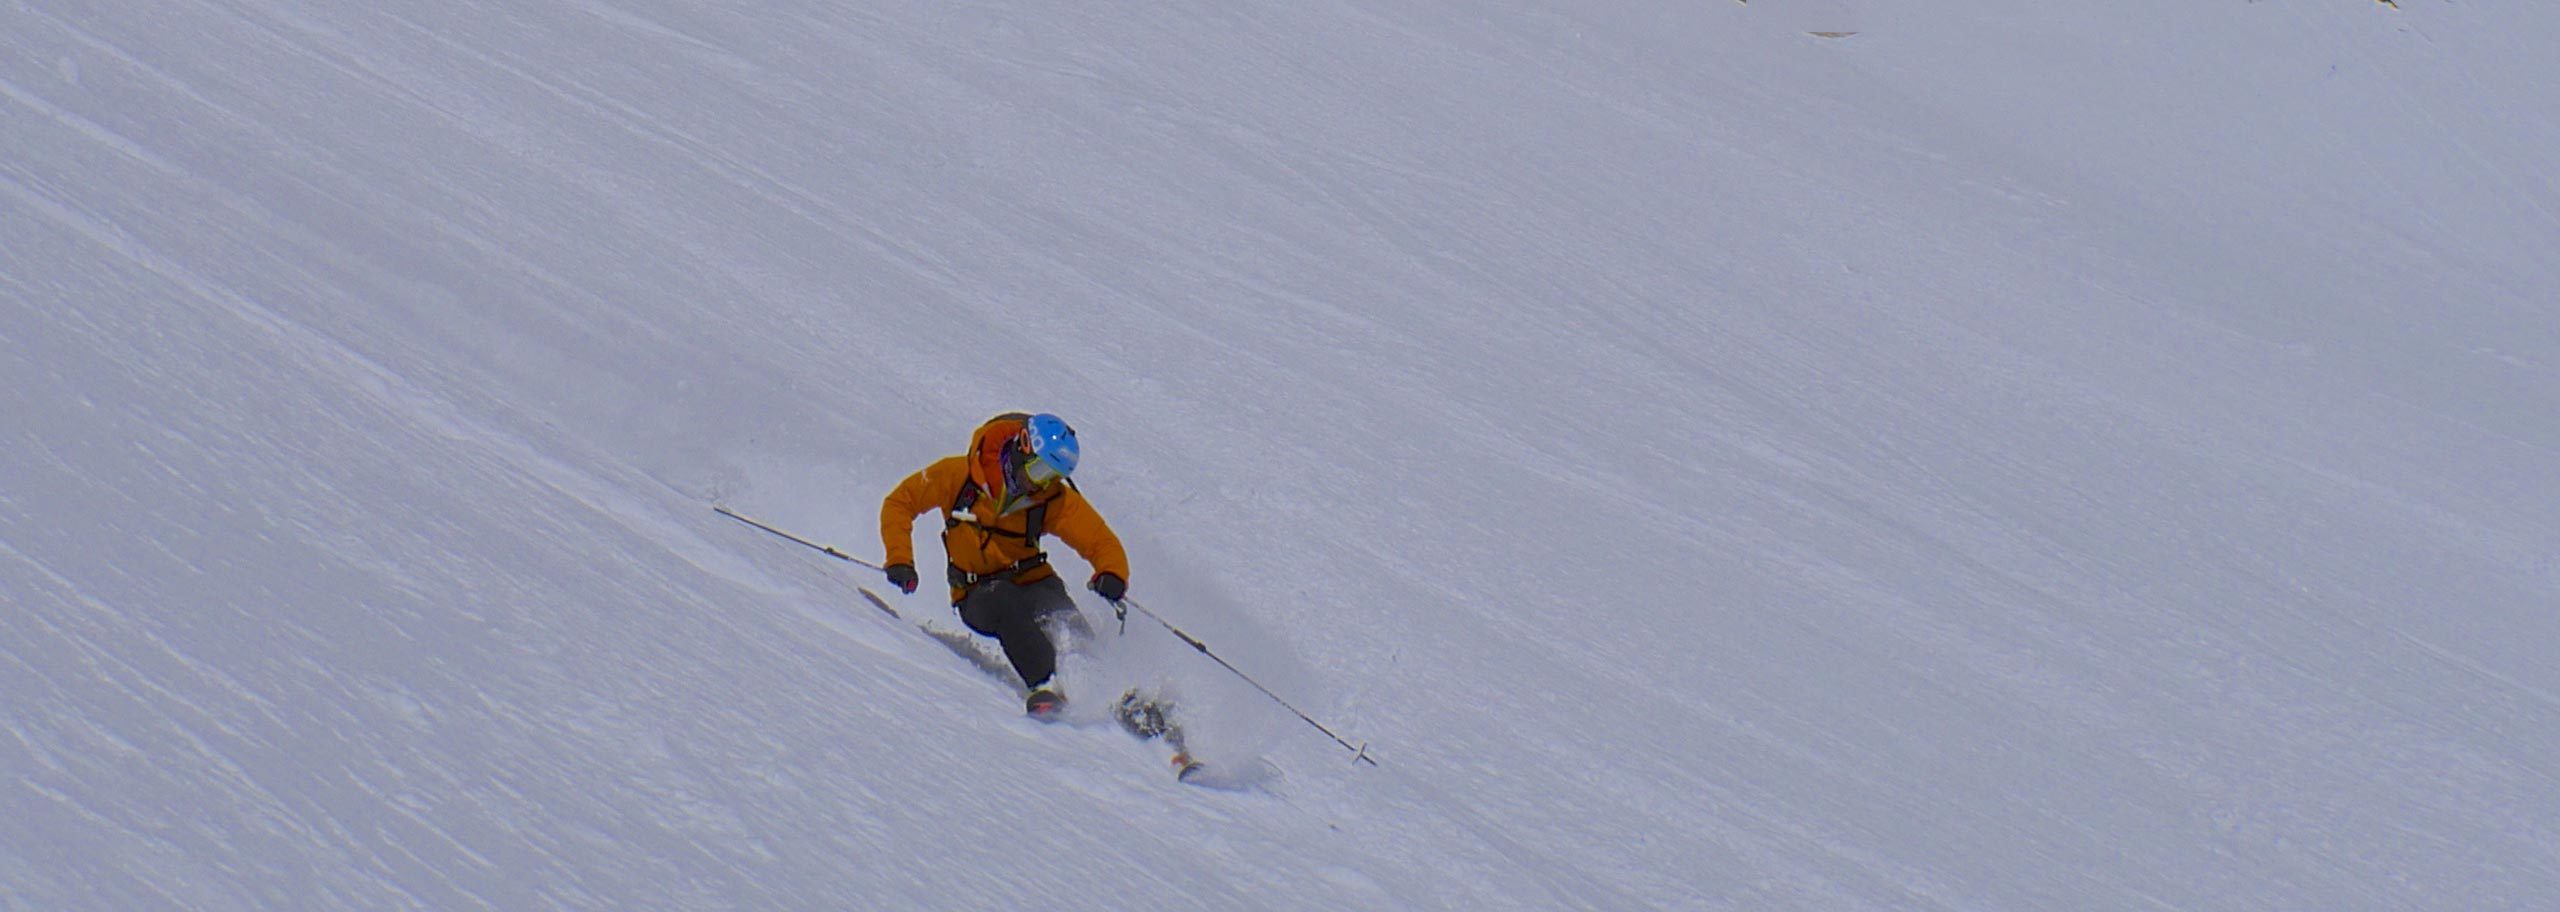 Off-piste Skiing in Pragelato, Guided Freeride Skiing